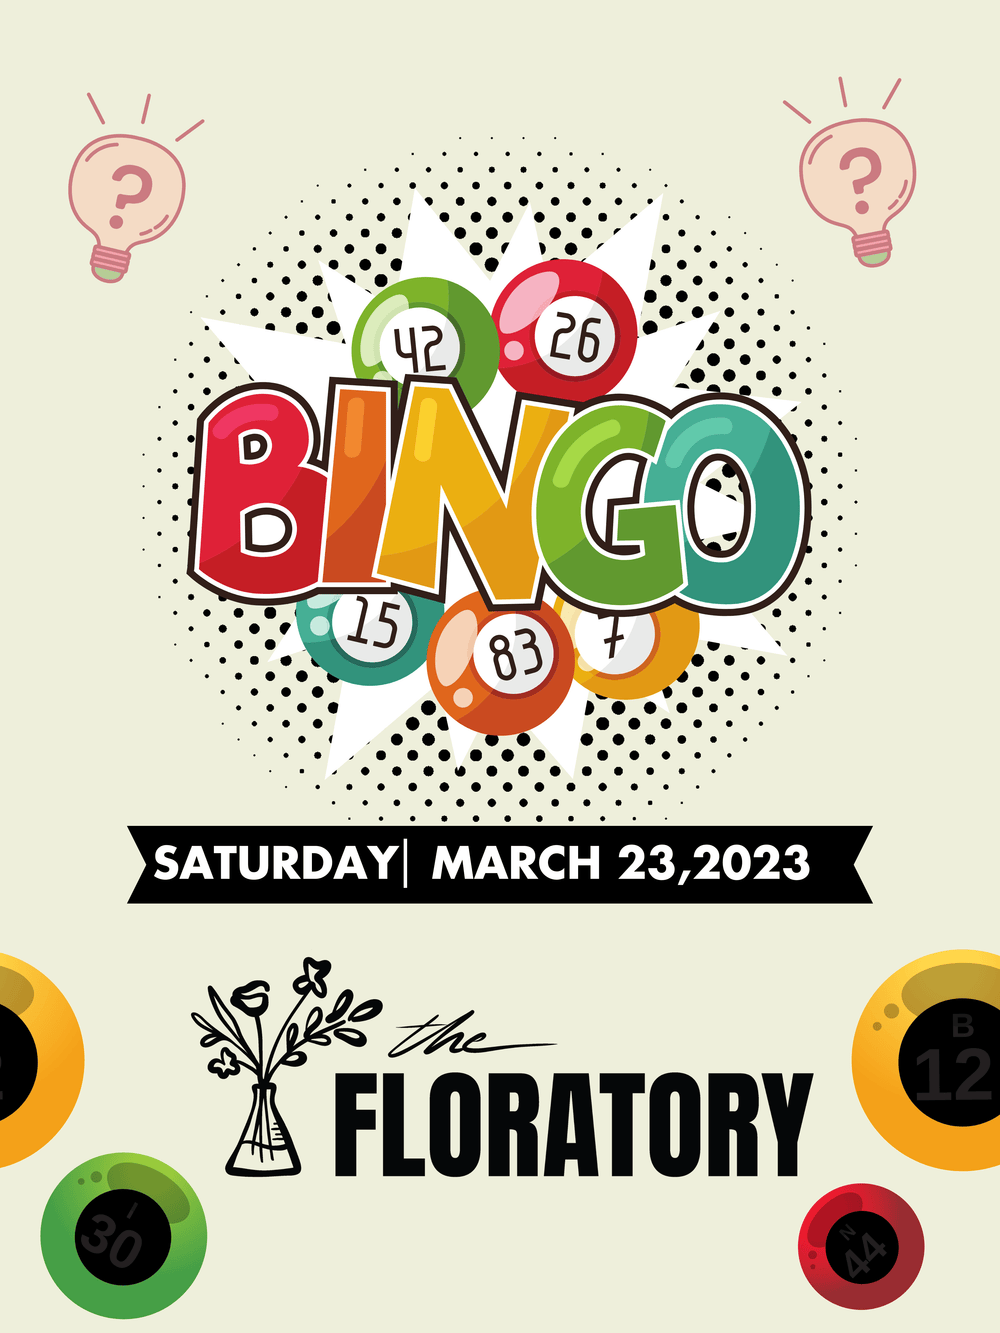 FloraBingo - The Floratory